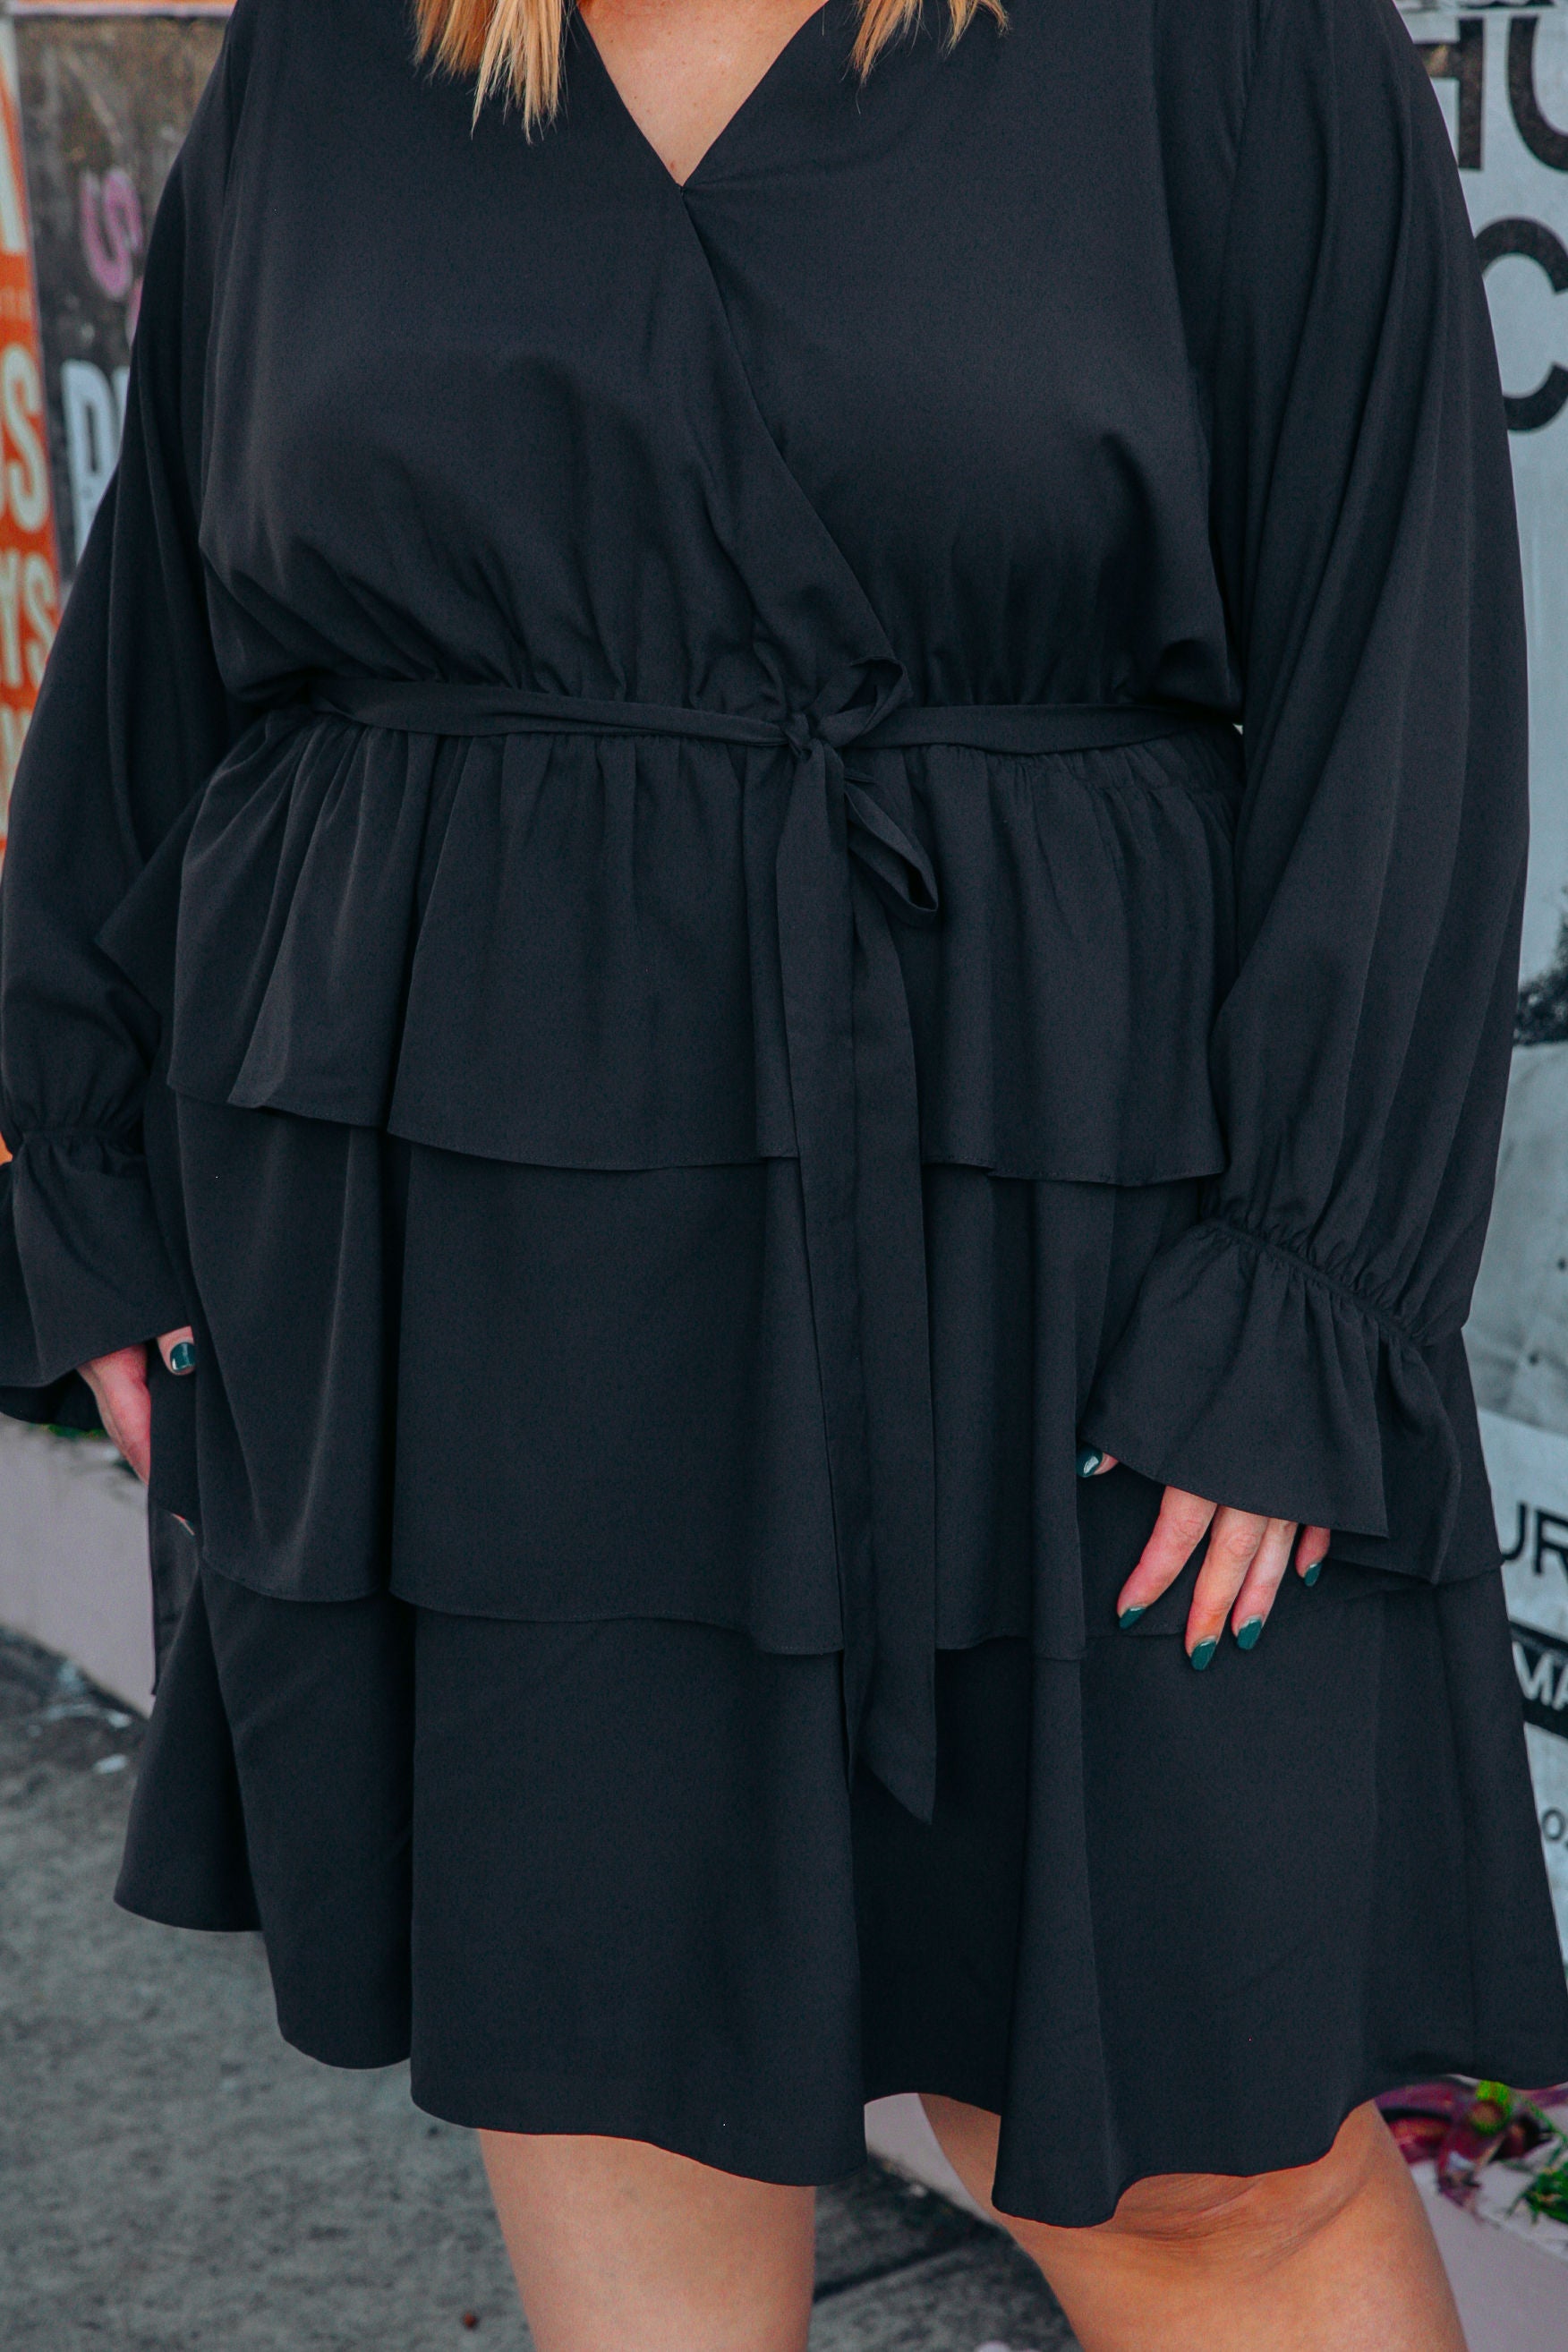 Monique Black Tiered Dress